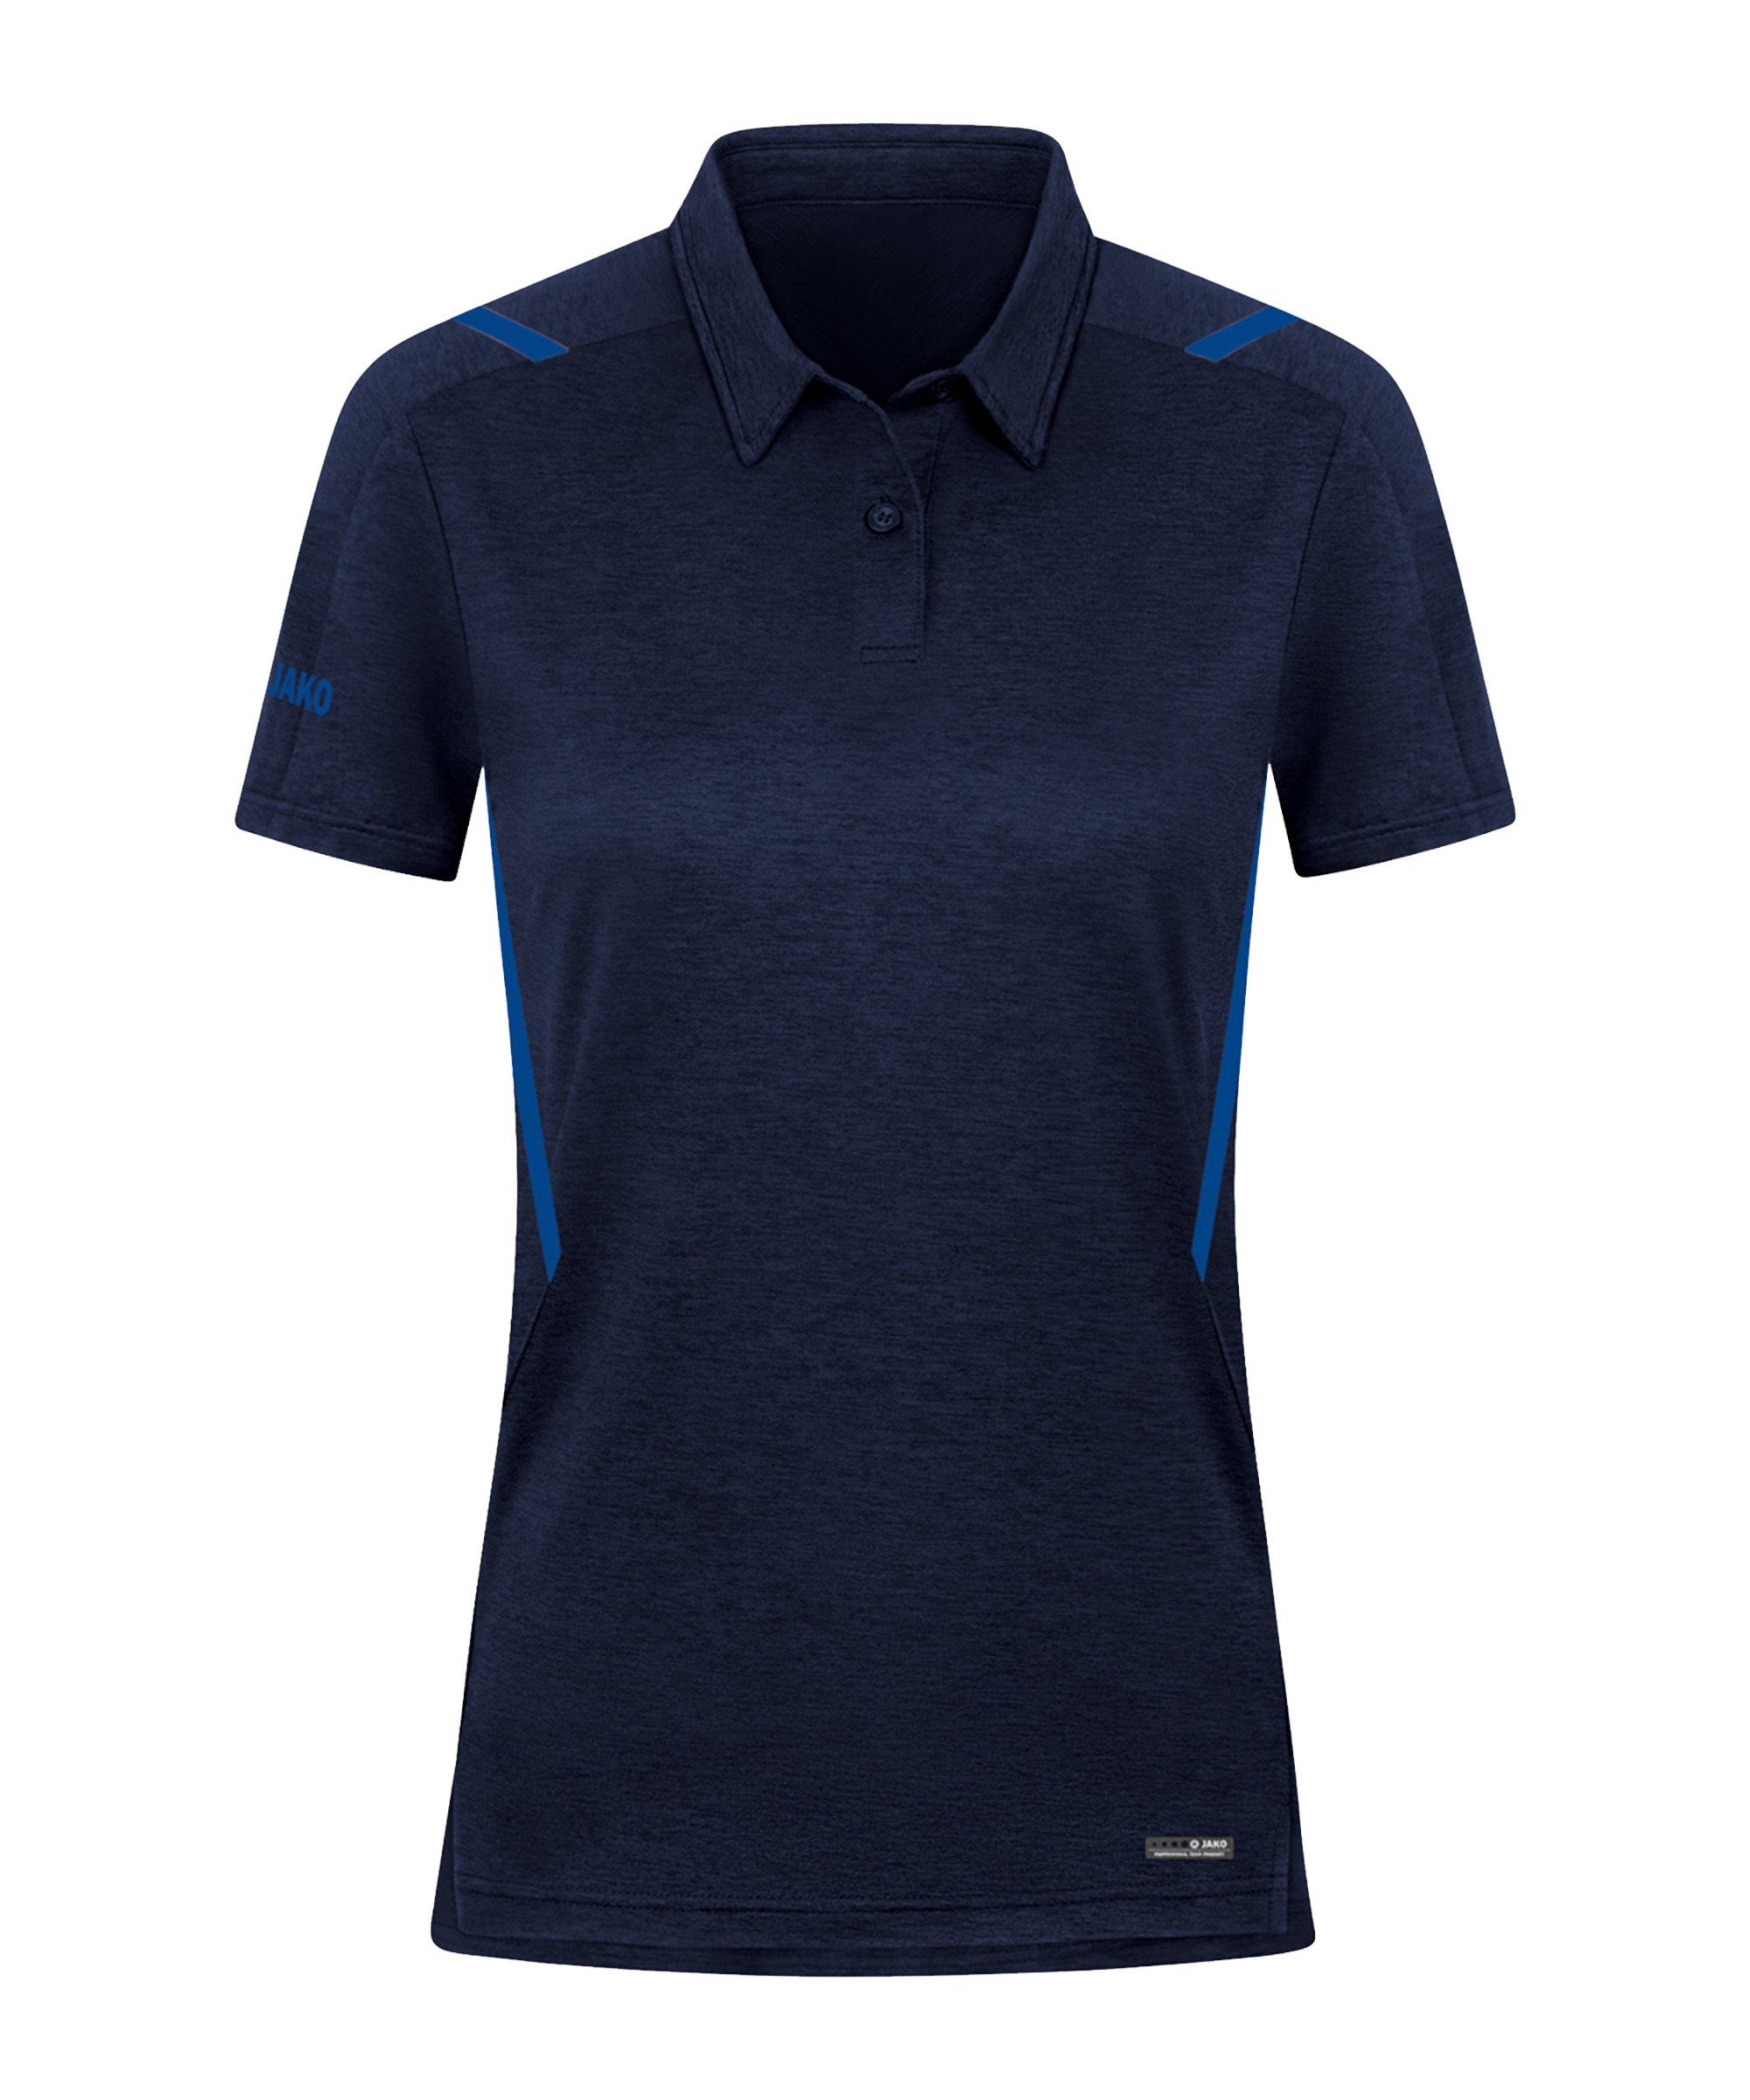 Jako Poloshirt Challenge Polo Damen default blaublau | Poloshirts